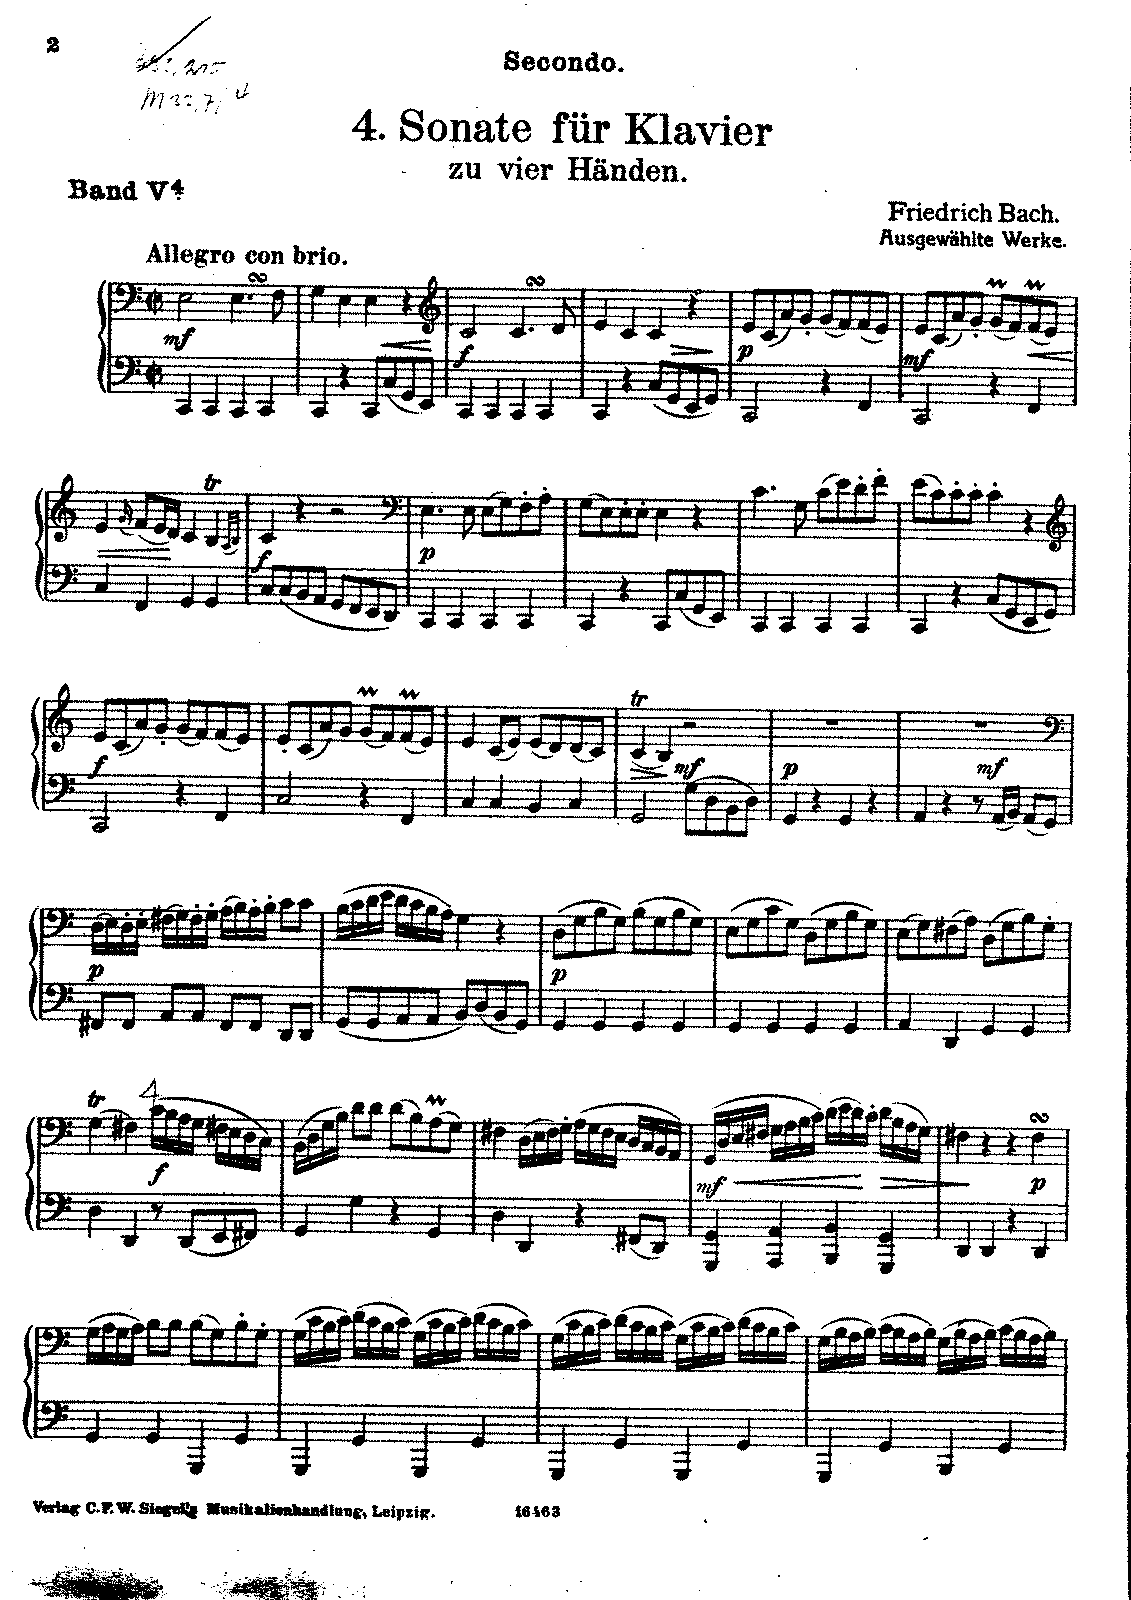 Моцарт соната ре мажор для фортепиано. Бах Сонатина Ноты для фортепиано. Соната 6 Моцарт. Бах Соната до мажор. Моцарт Сонатина до мажор.